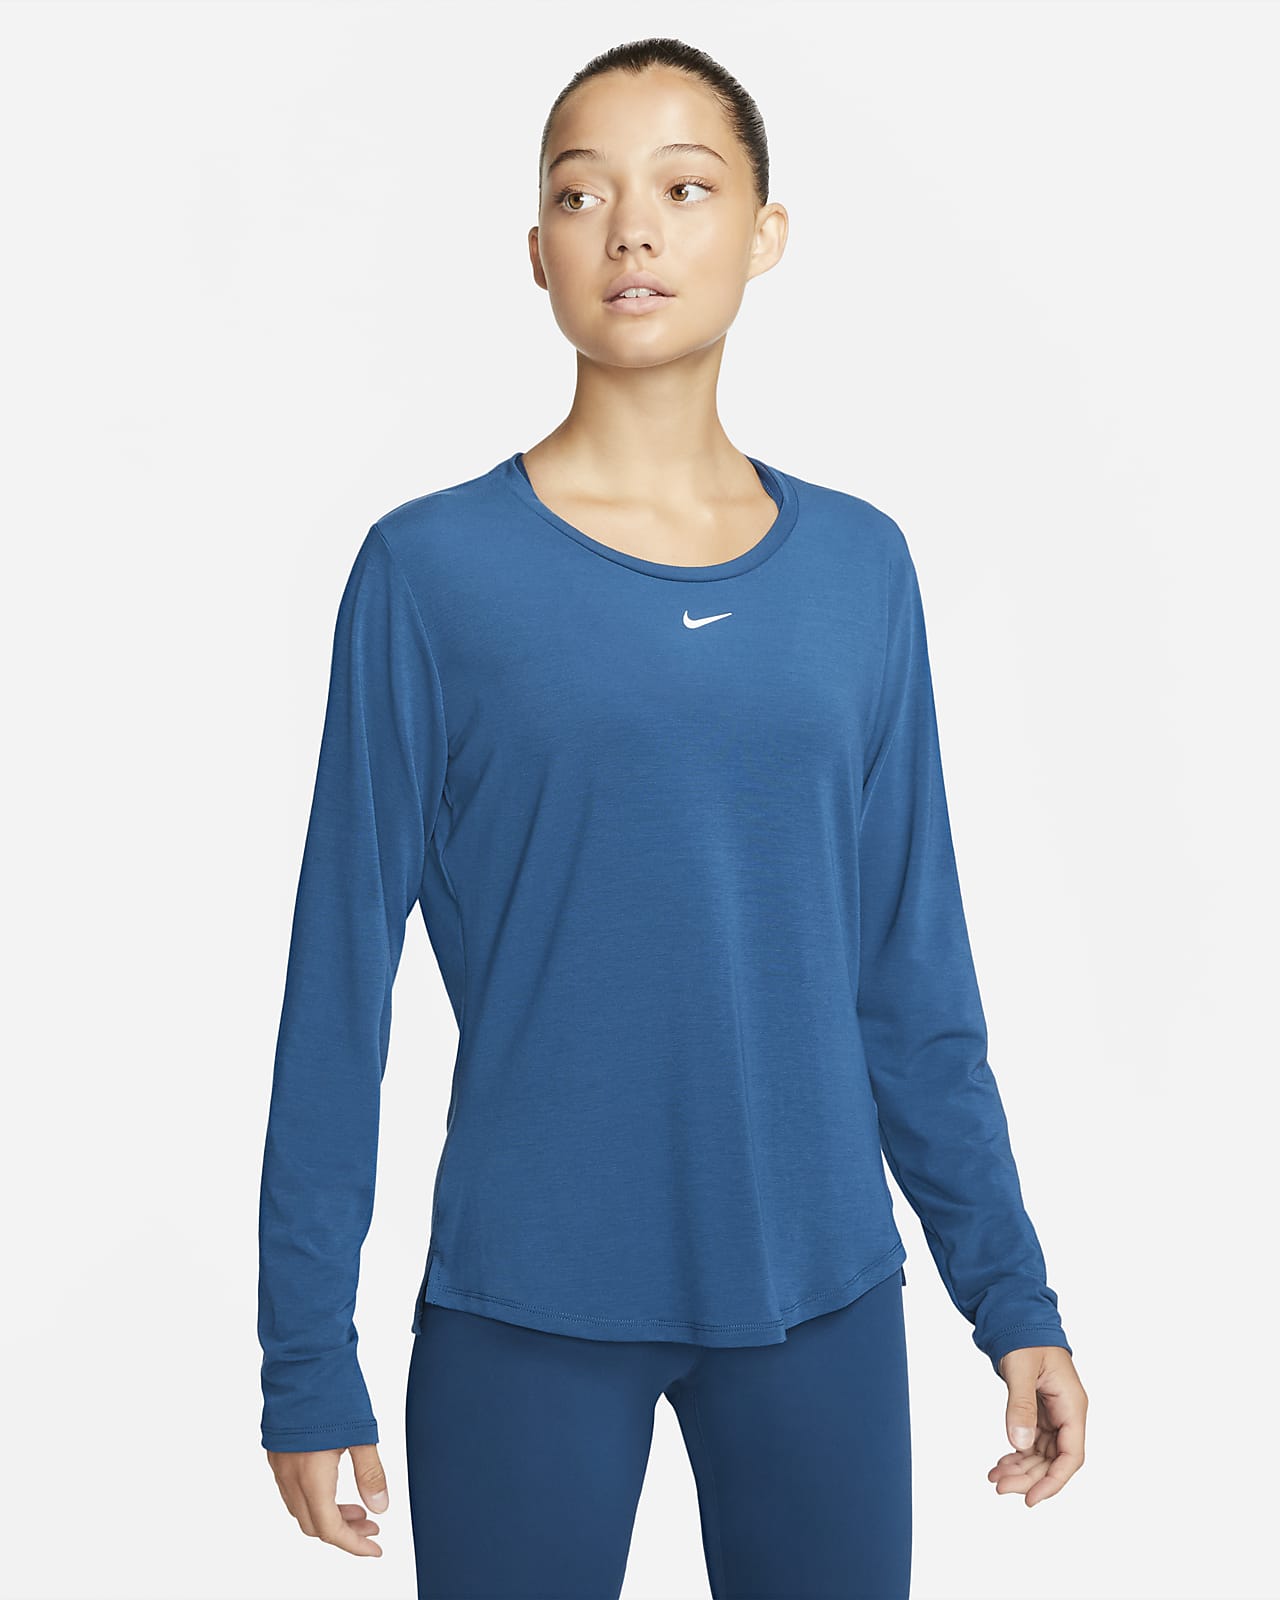 Nike Dri-FIT UV One Luxe Women's Standard Fit Long-Sleeve Top